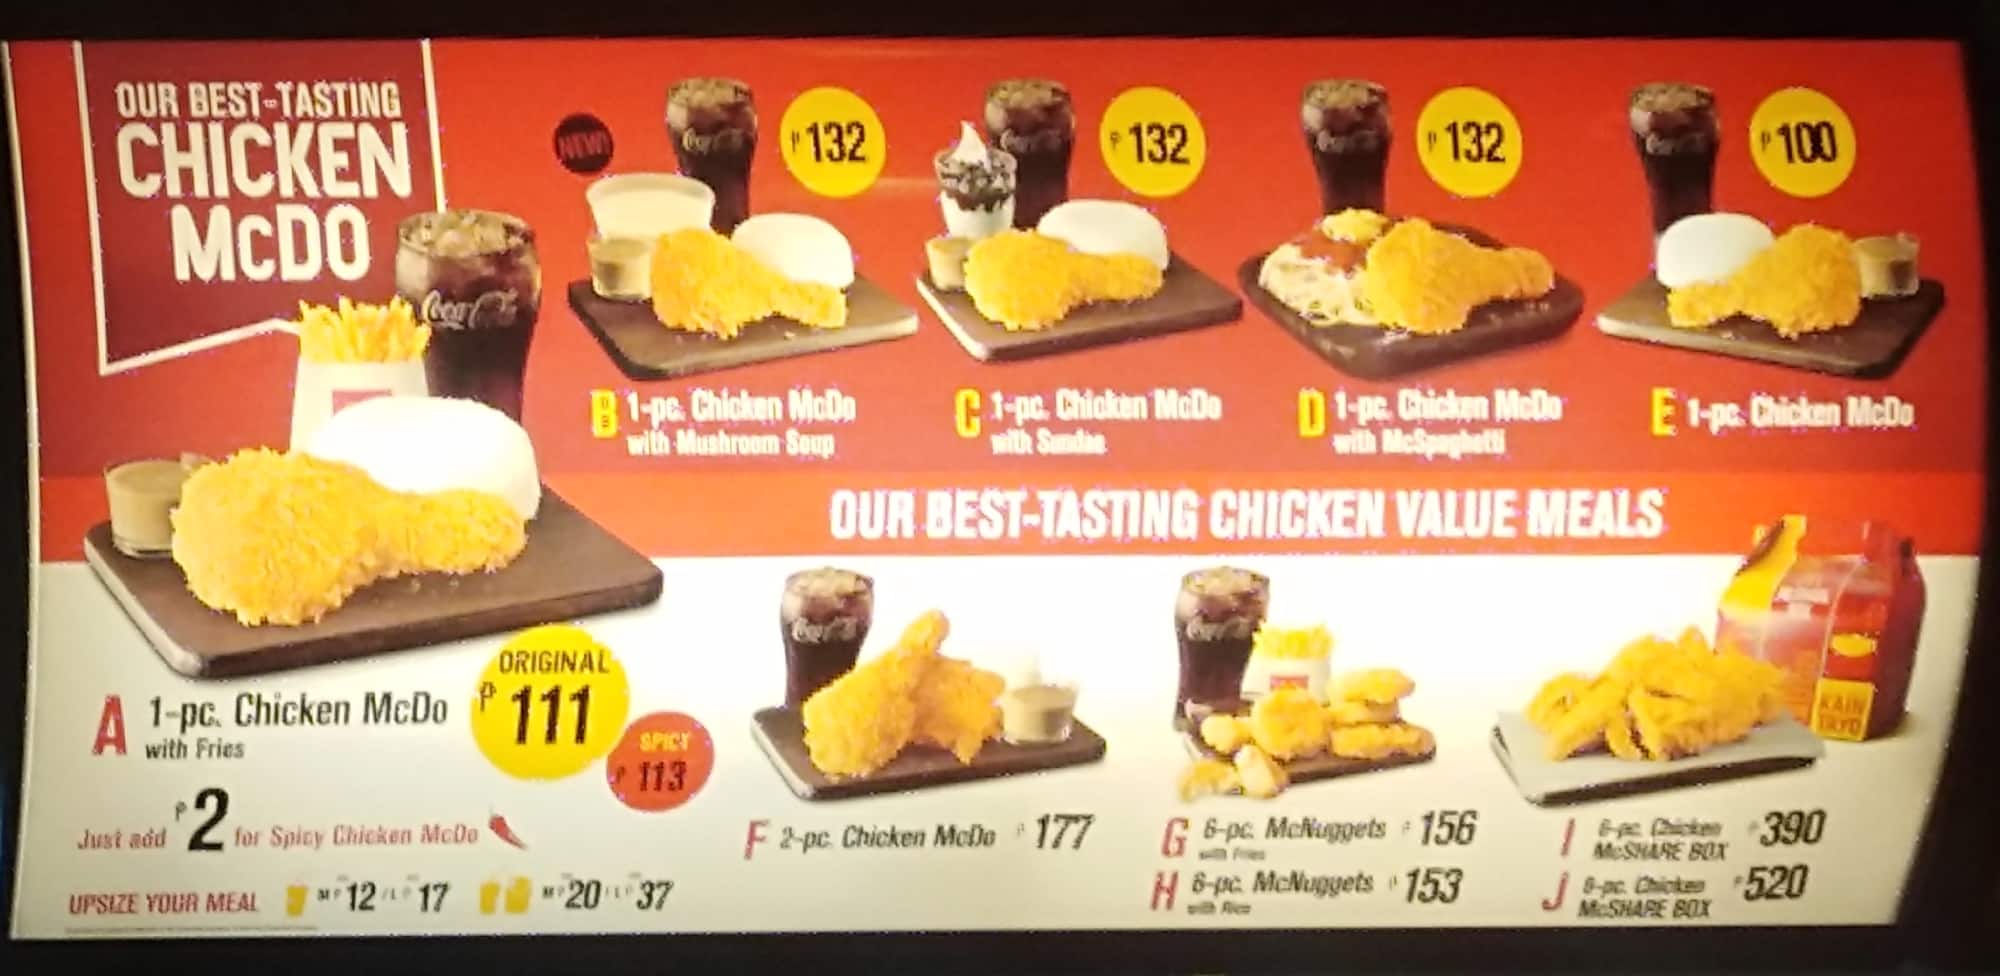 goldilocks delivery menu philippines